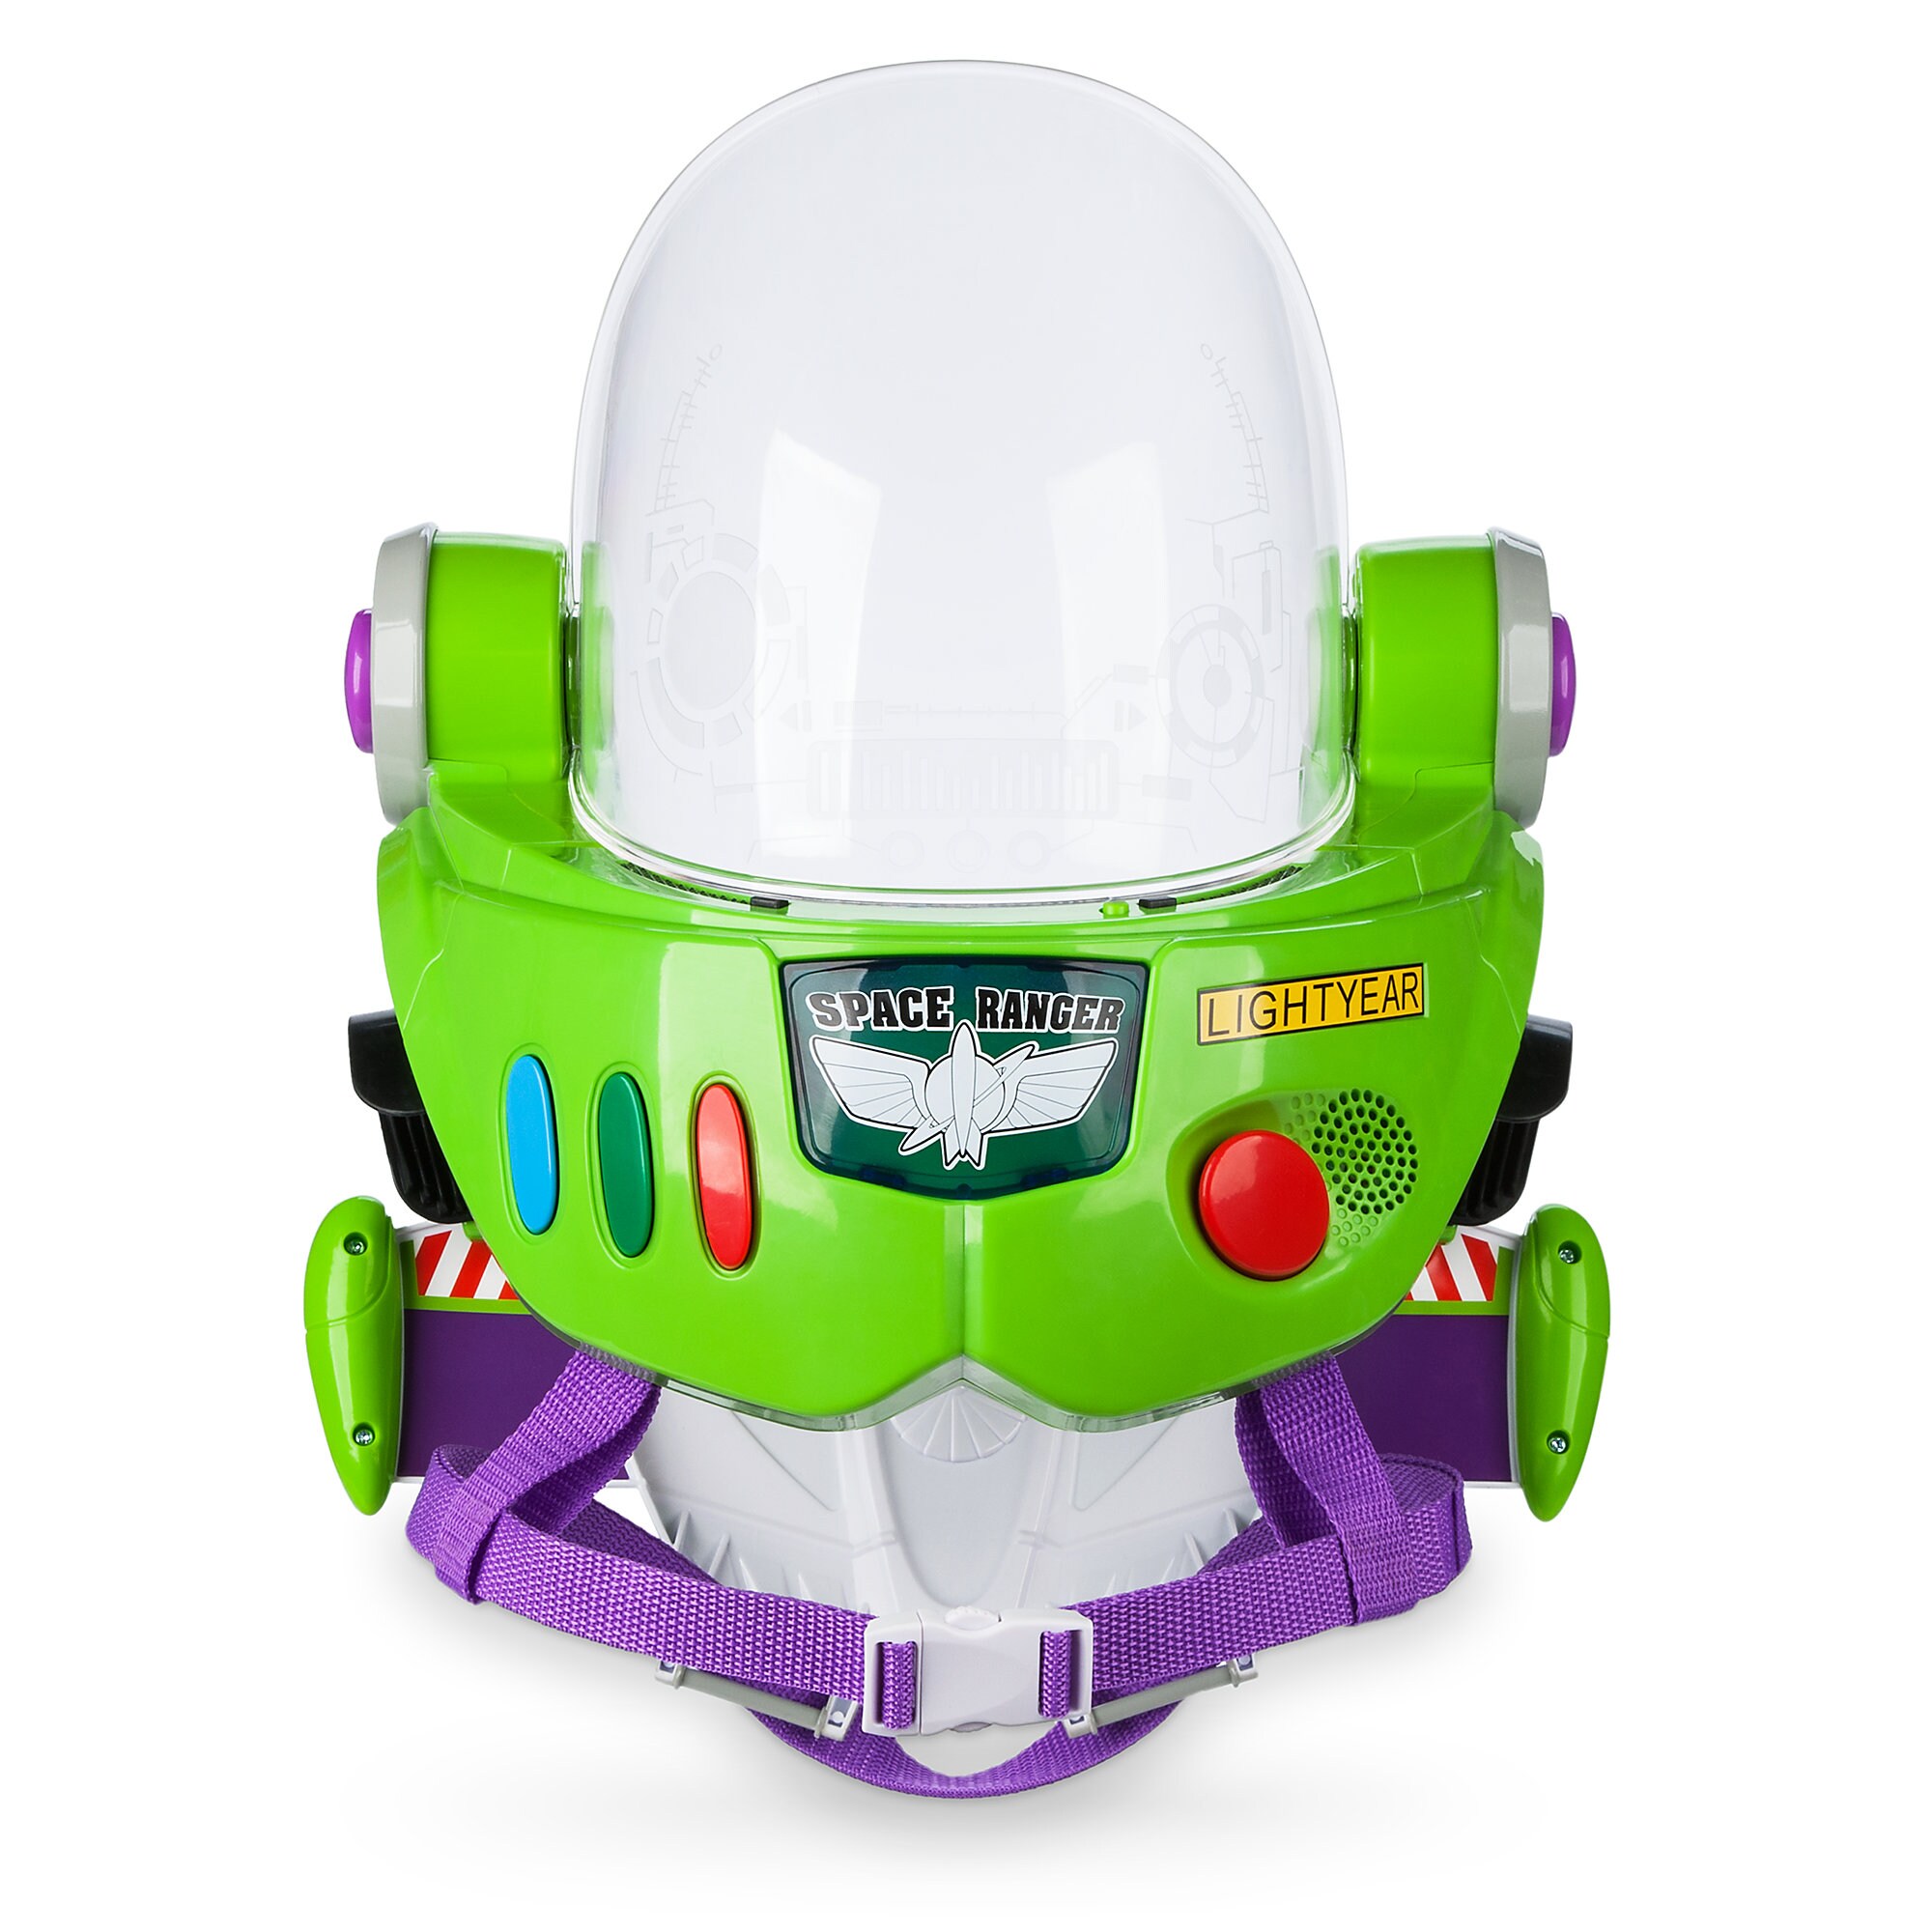 Buzz Lightyear Space Ranger Armor - Toy Story 4